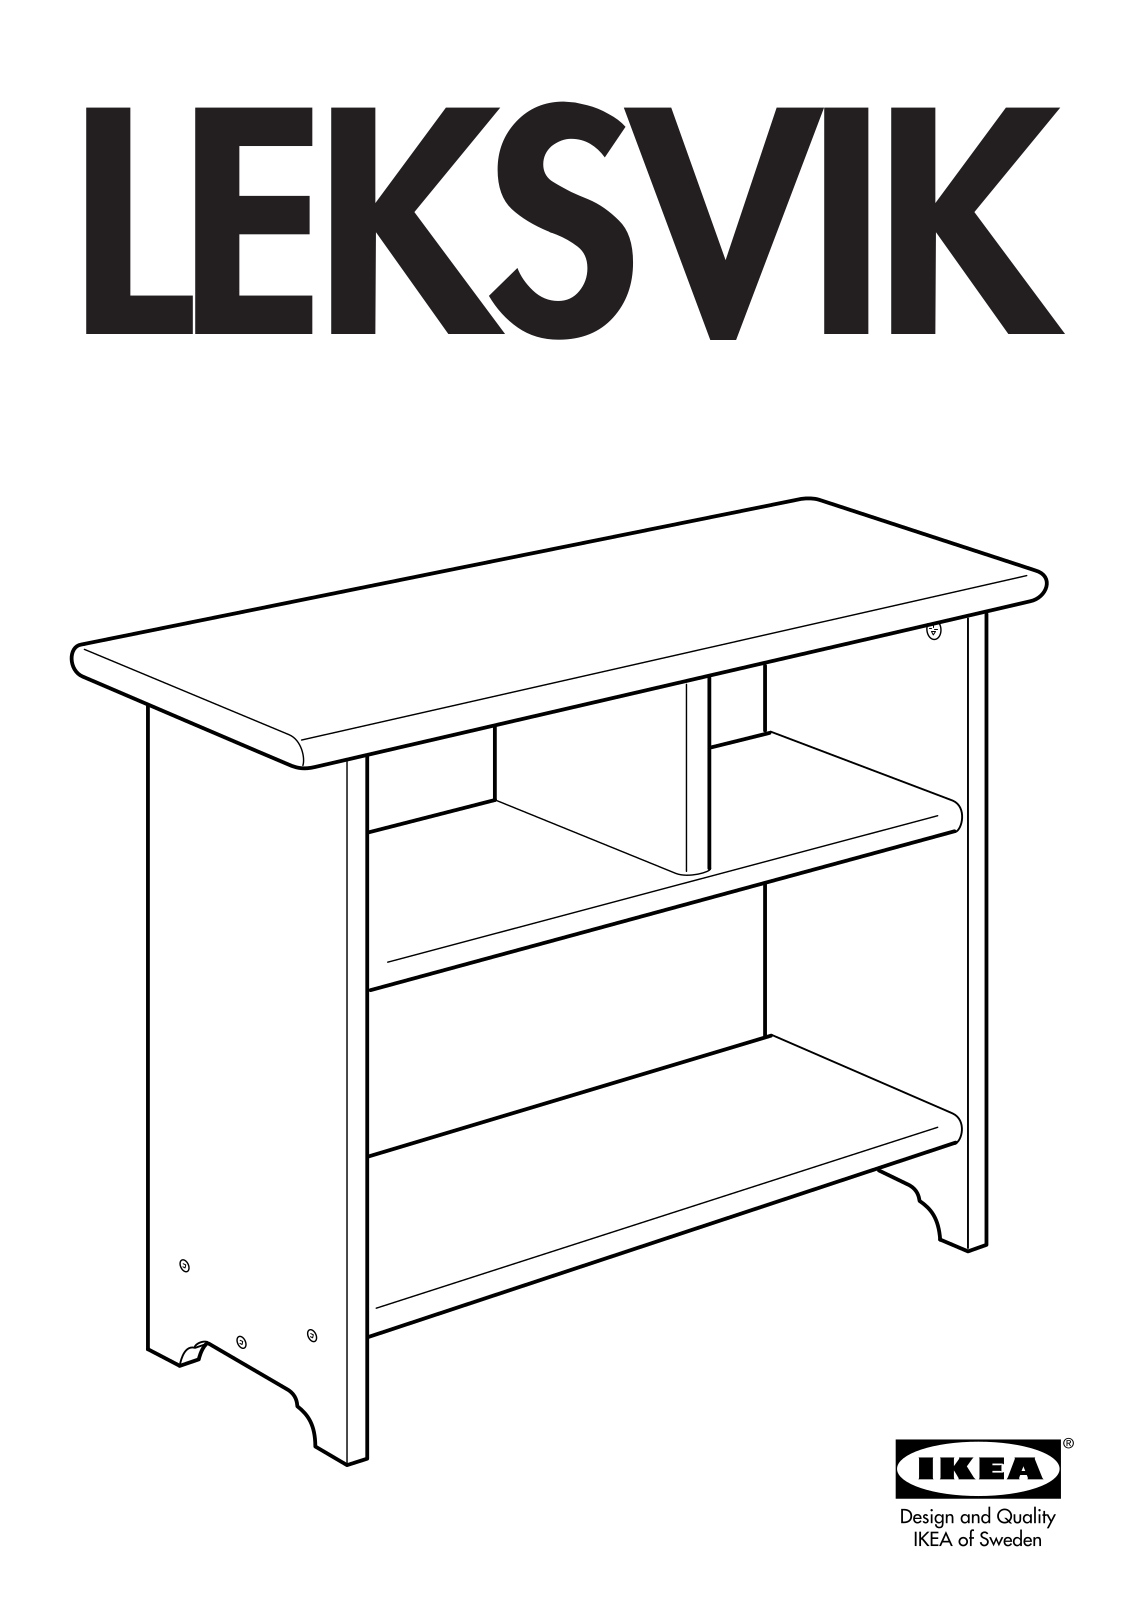 IKEA LEKSVIK SIDE TABLE 30X13 Assembly Instruction